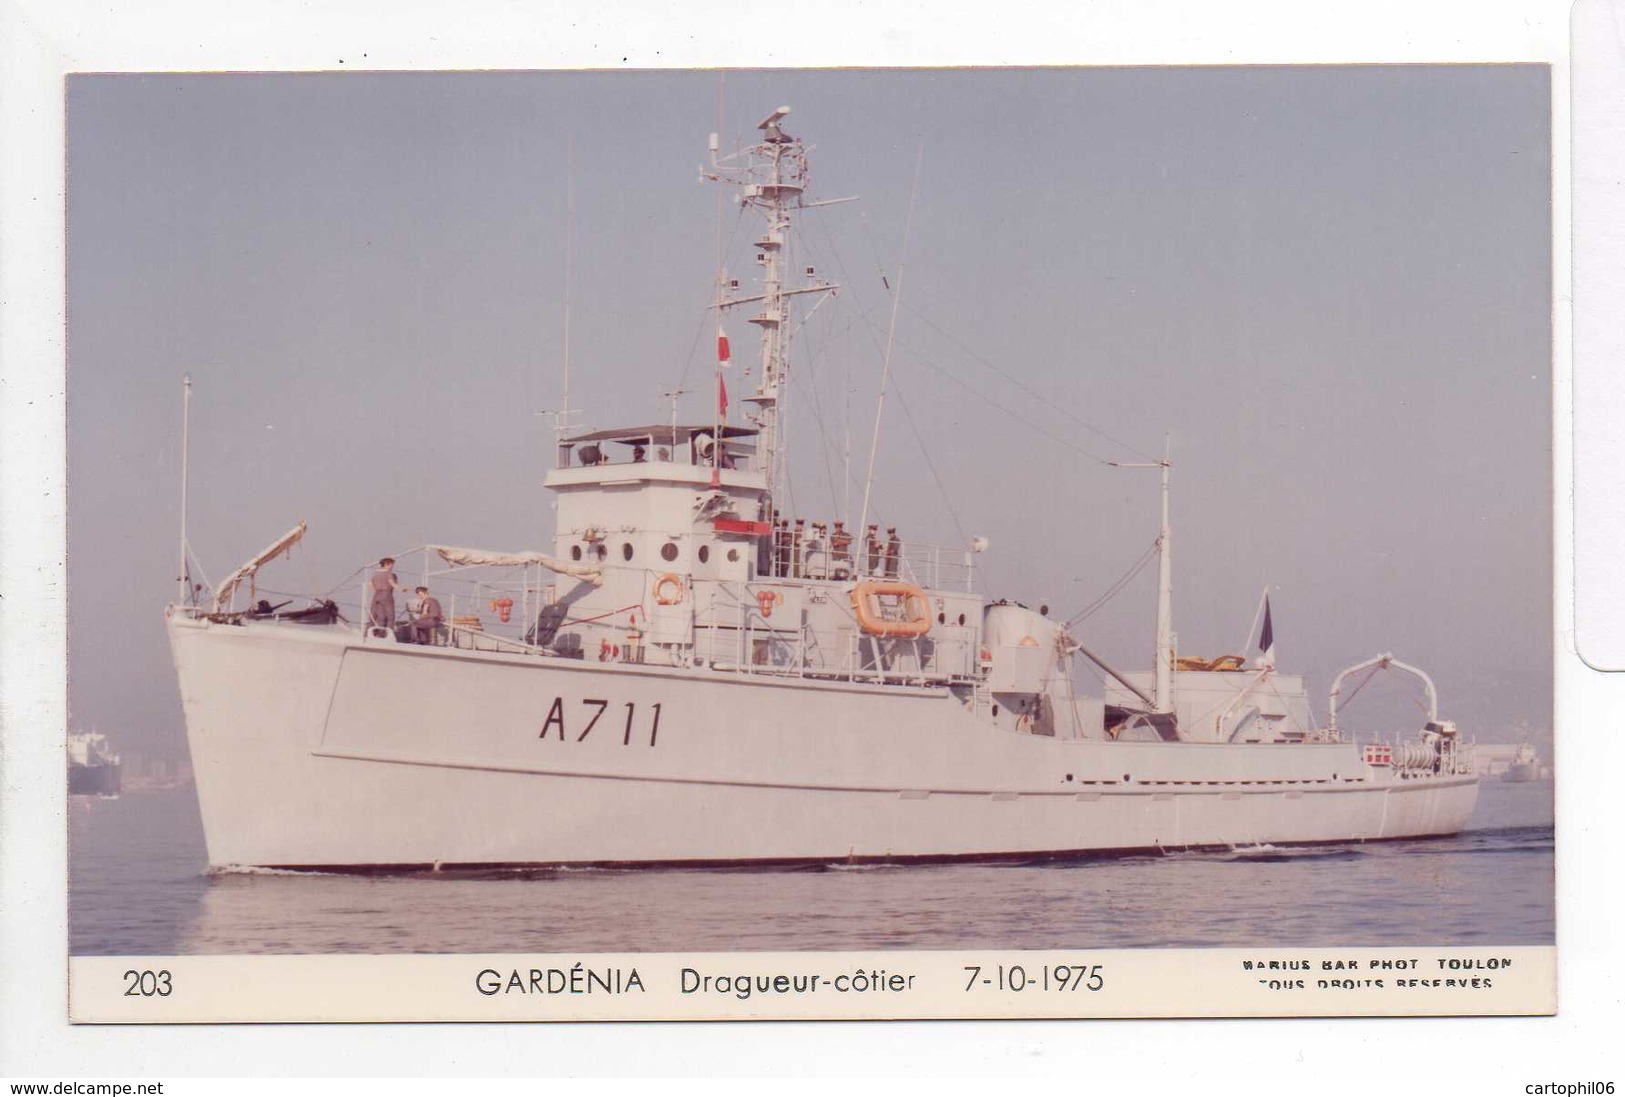 - CPSM DRAGUEUR-COTIER GARDENIA 7-10-1975 - Photo MARIUS BAR 203 - - Warships